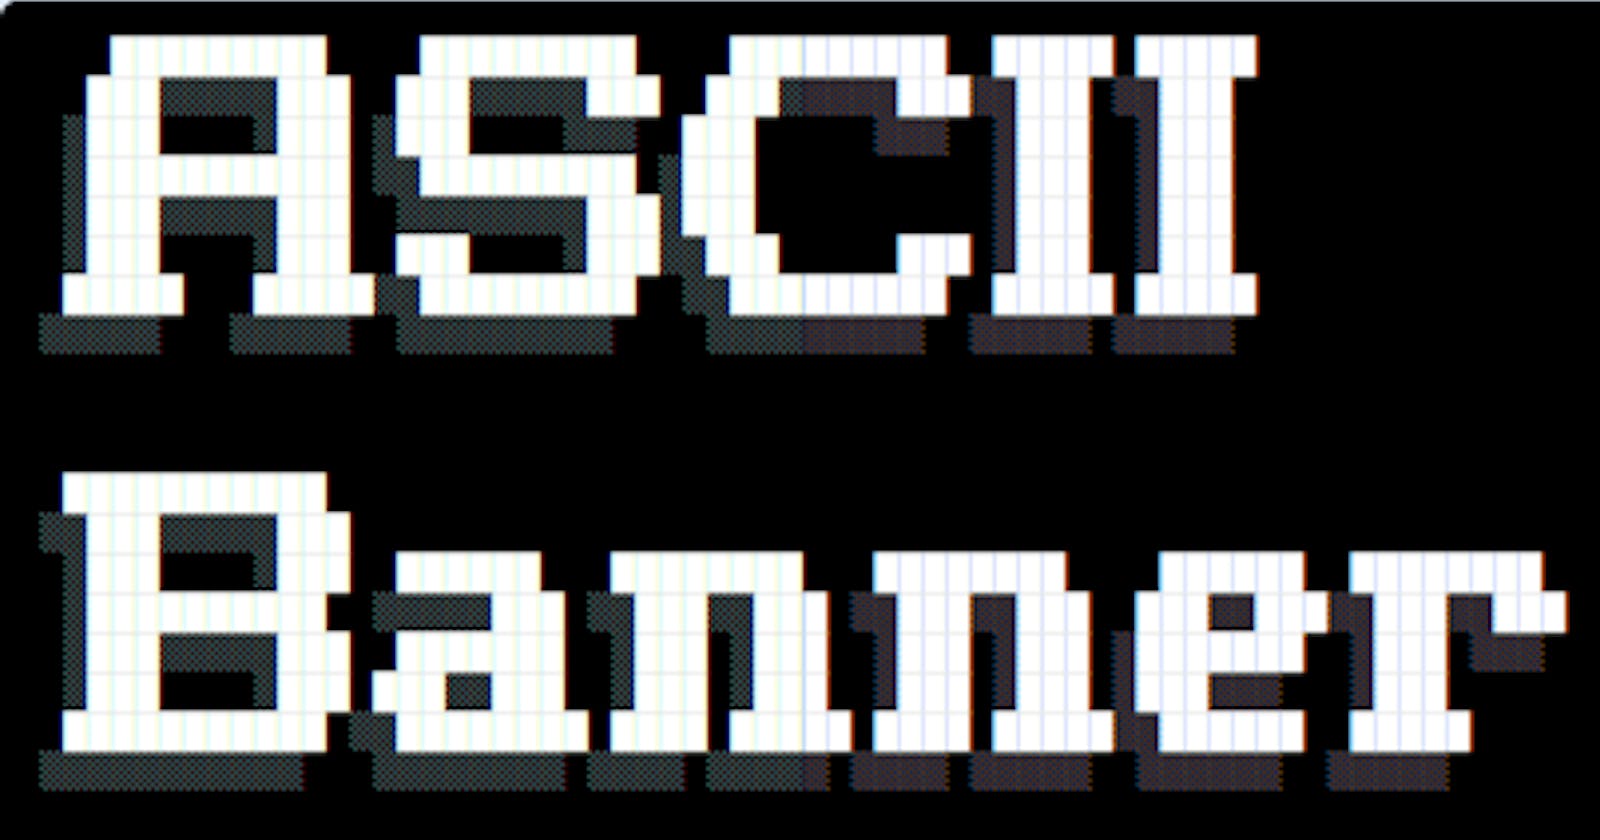 ASCII art banner for your Python script